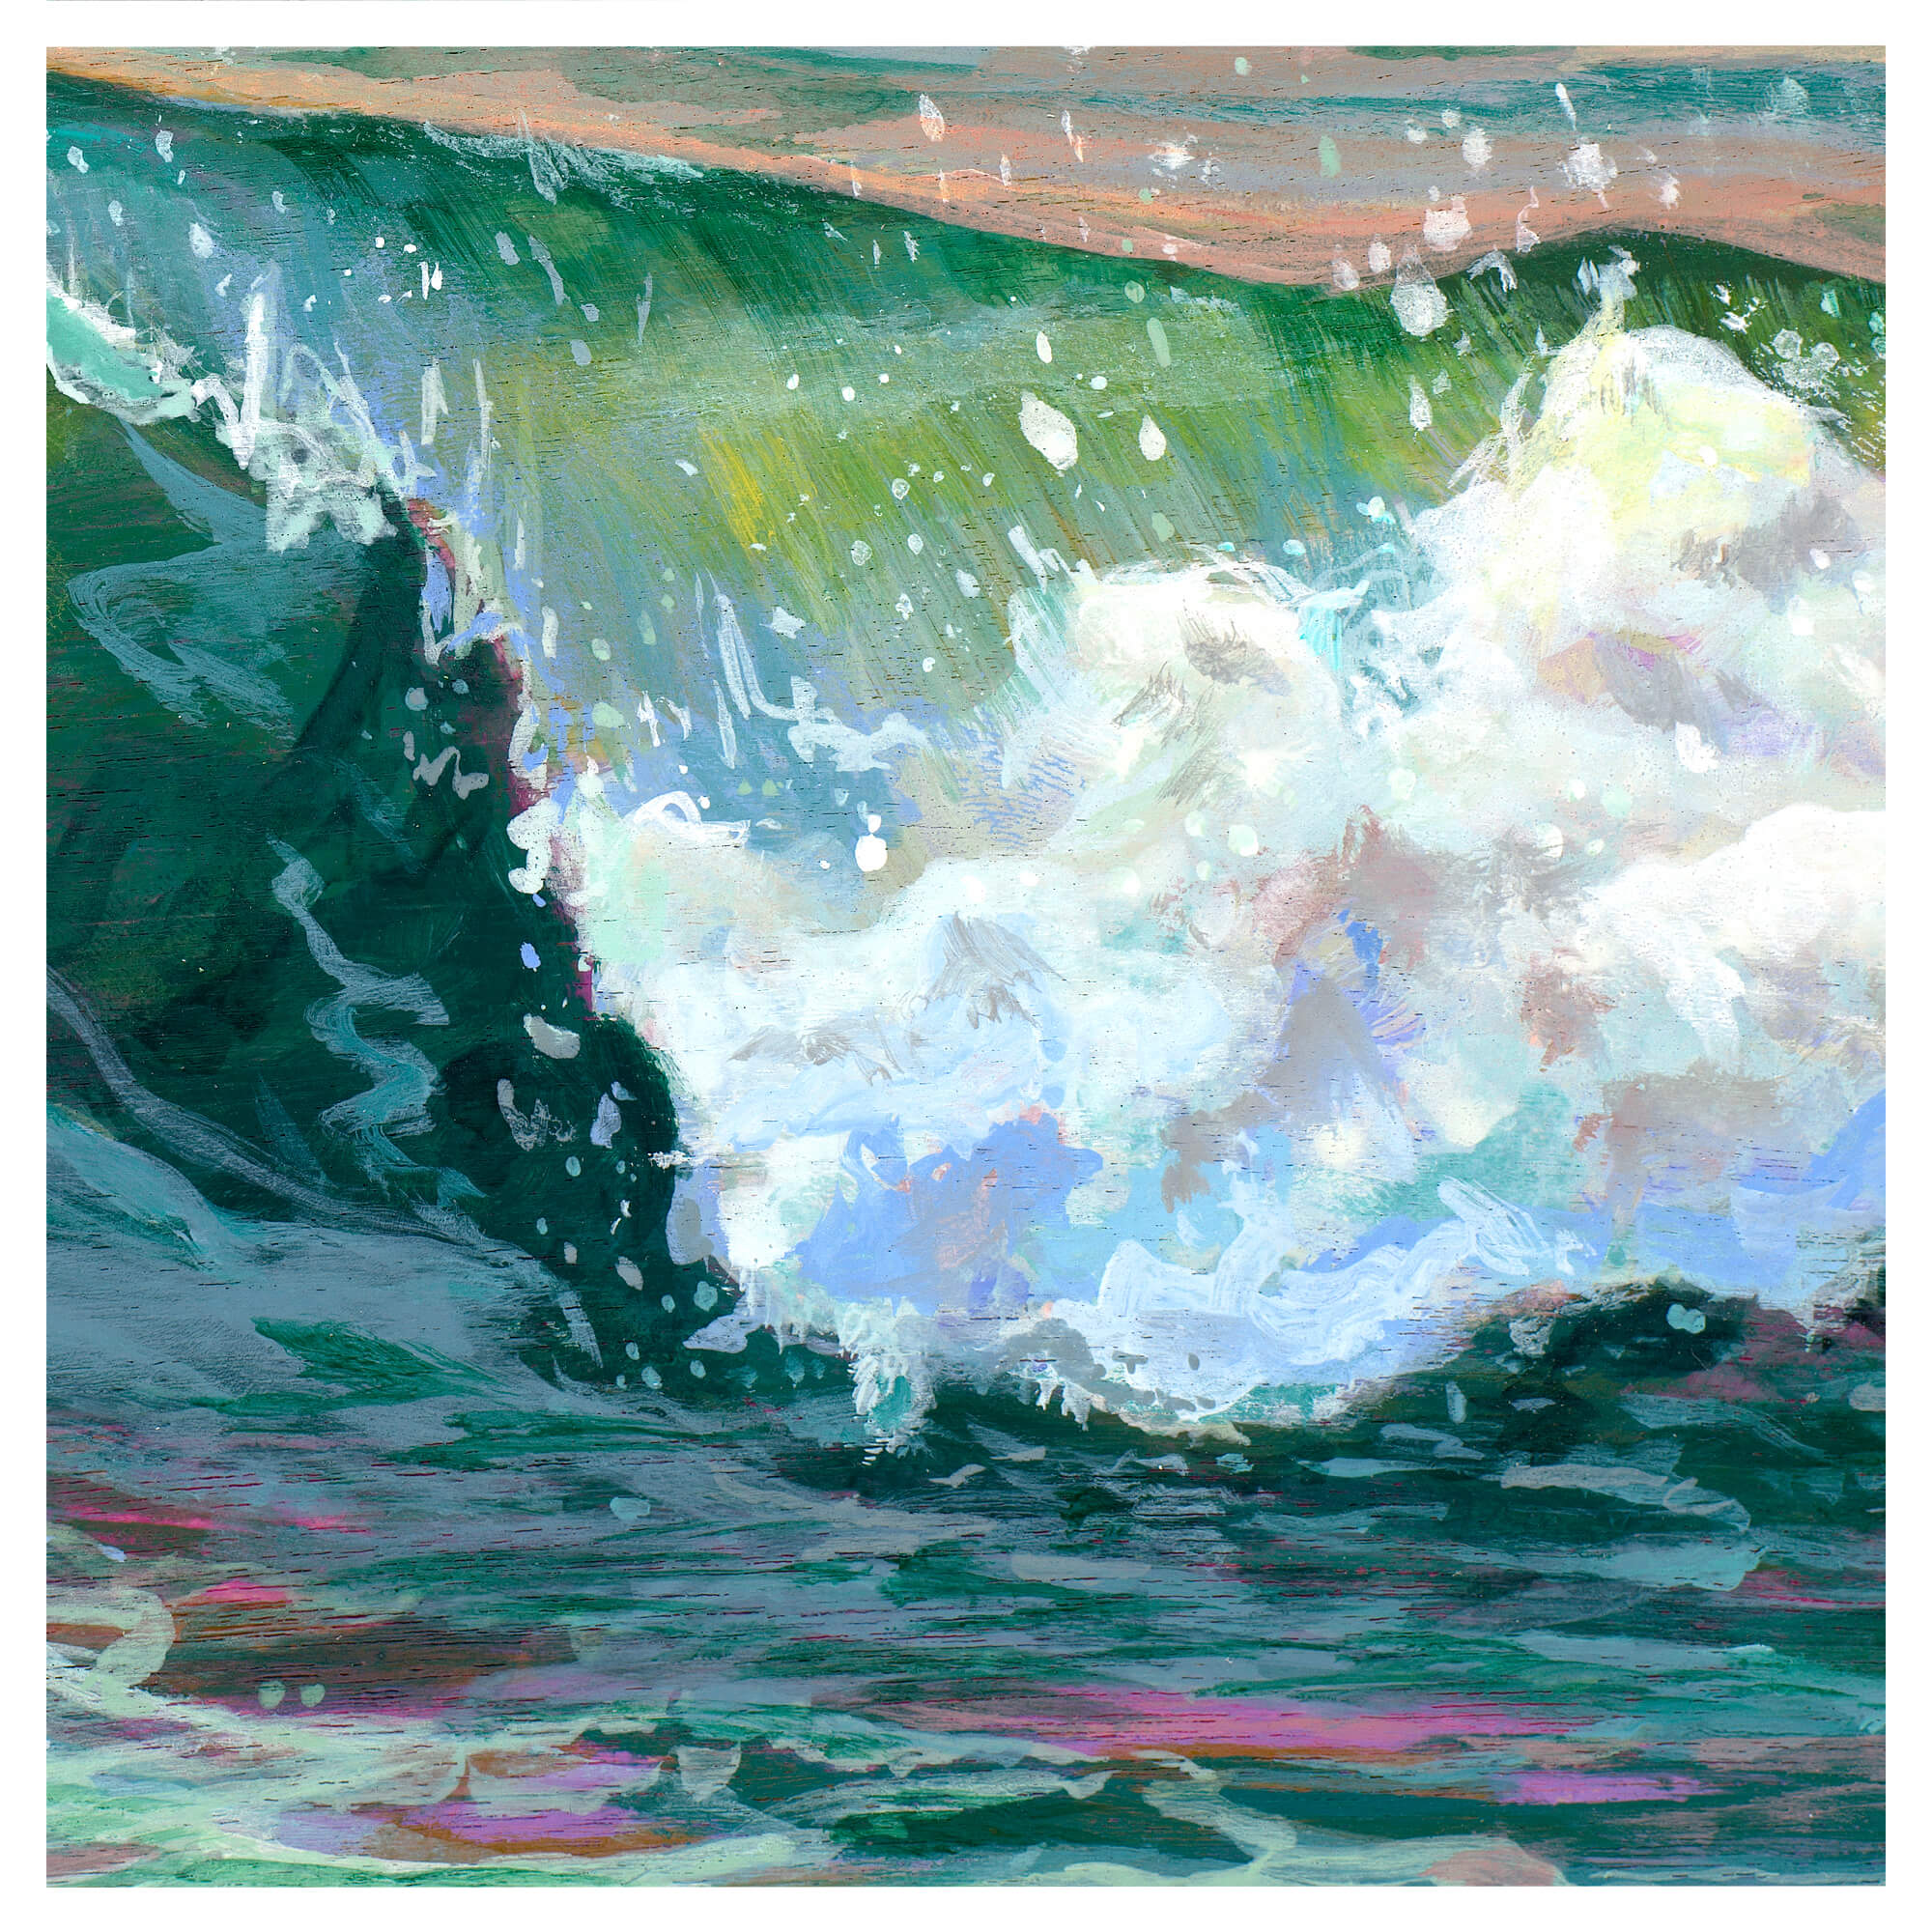 Large crashing waves by Hawaii artist Lindsay Wilkins